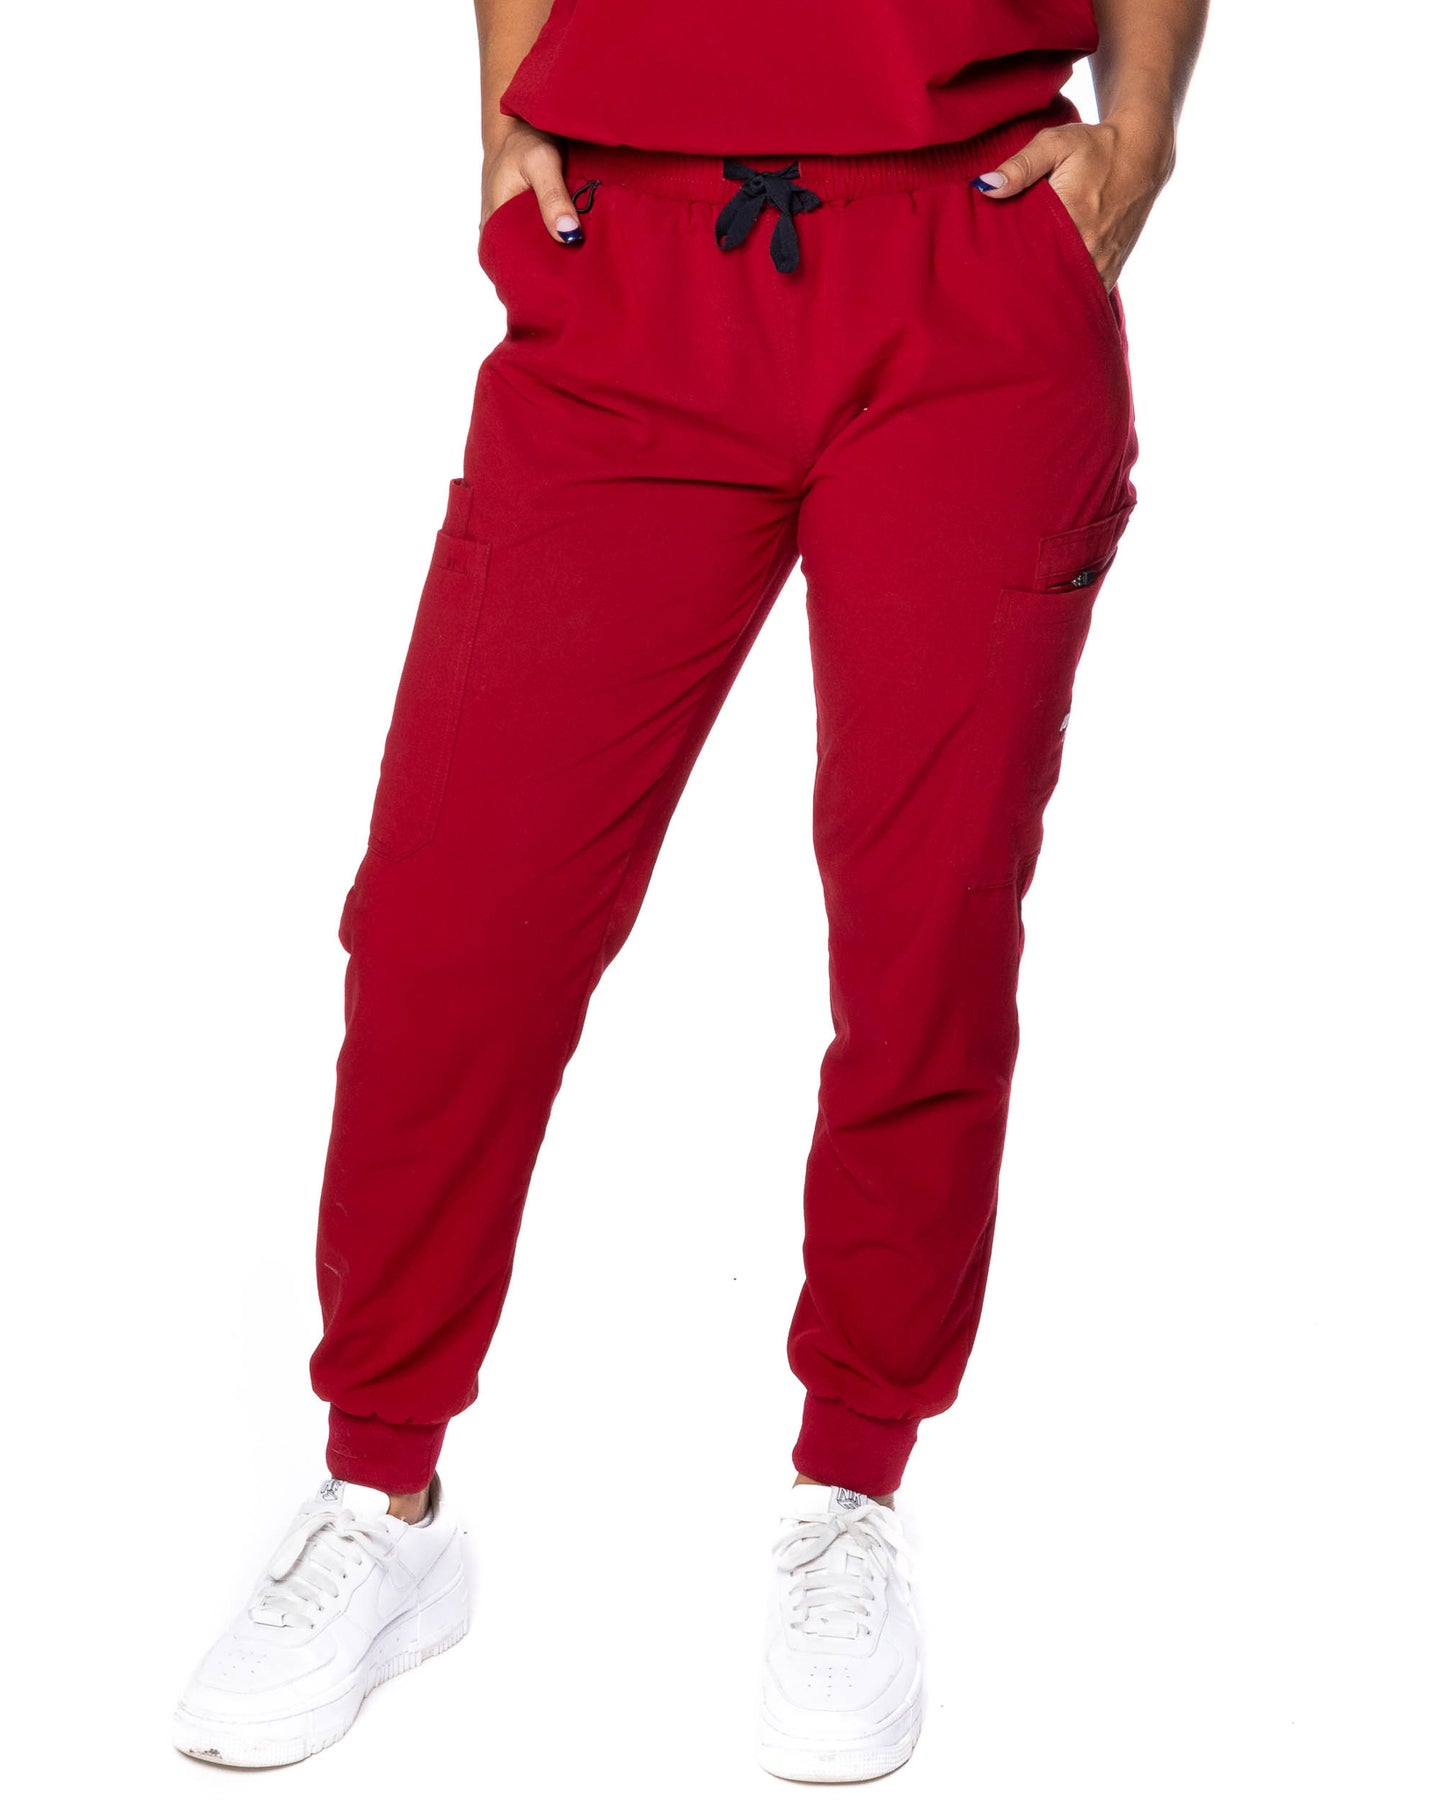 Red Women's Tall Jogger Scrub Pants HS030T-RDHH - The Nursing